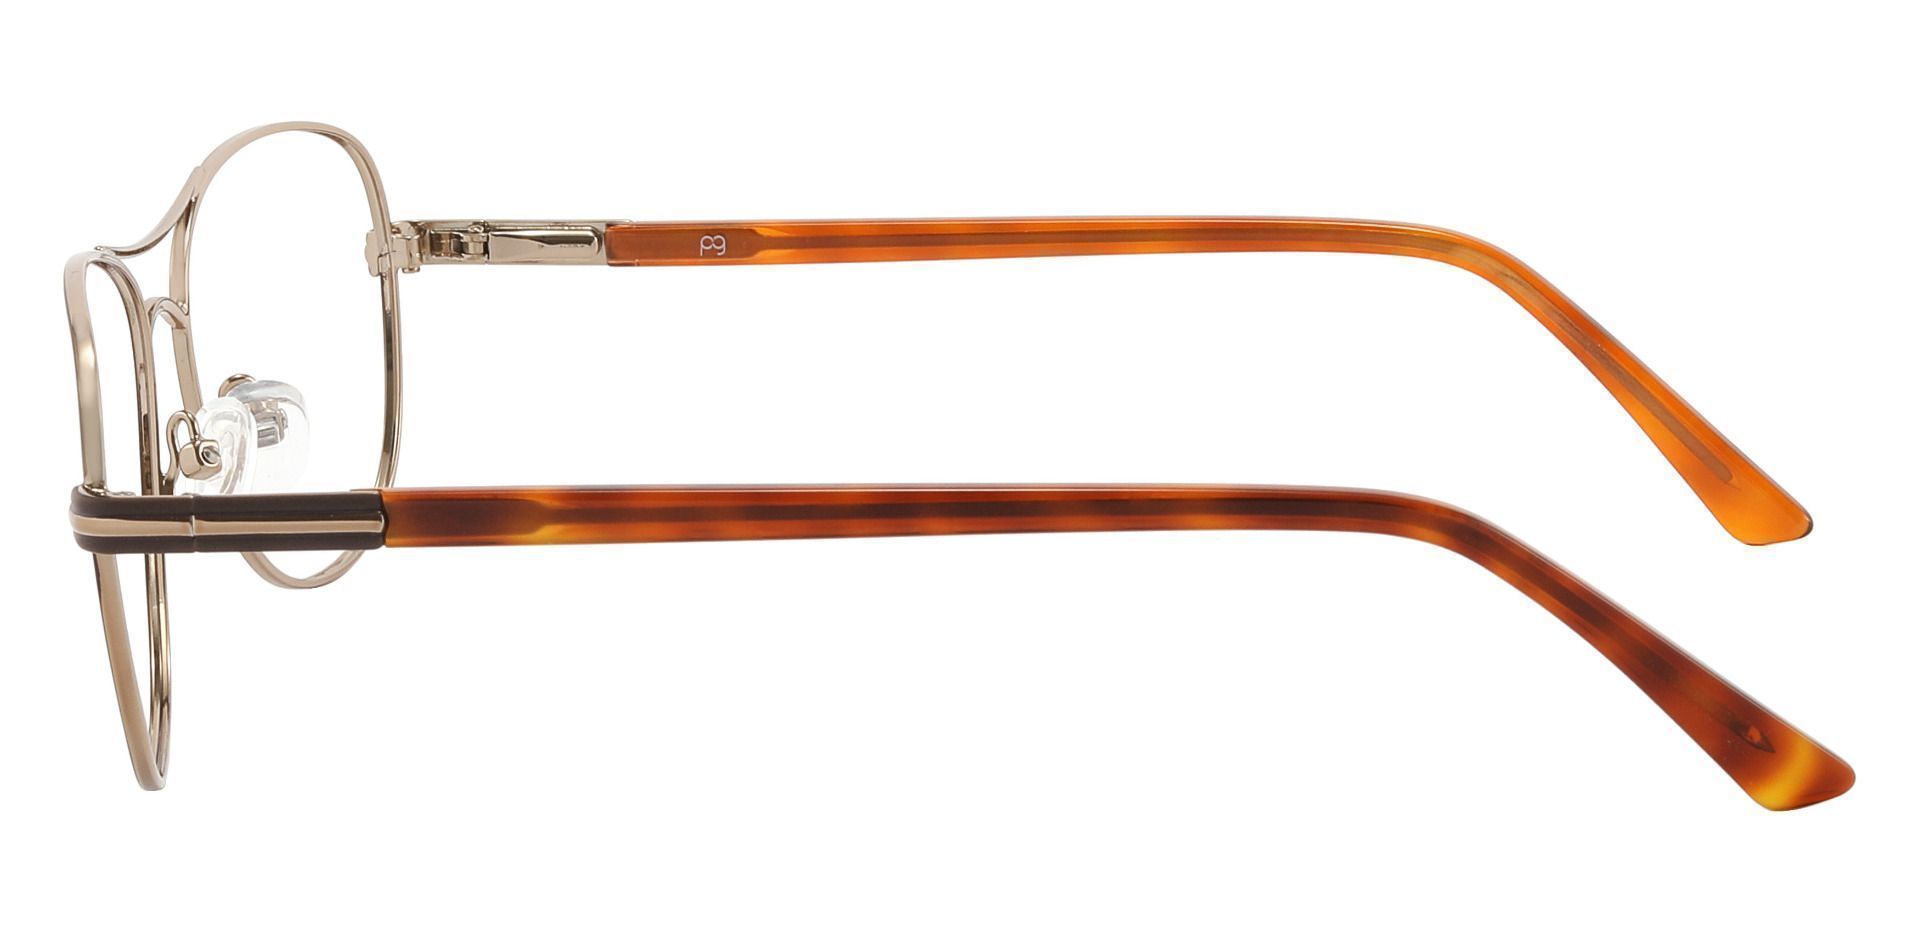 Reeves Aviator Progressive Glasses - Brown